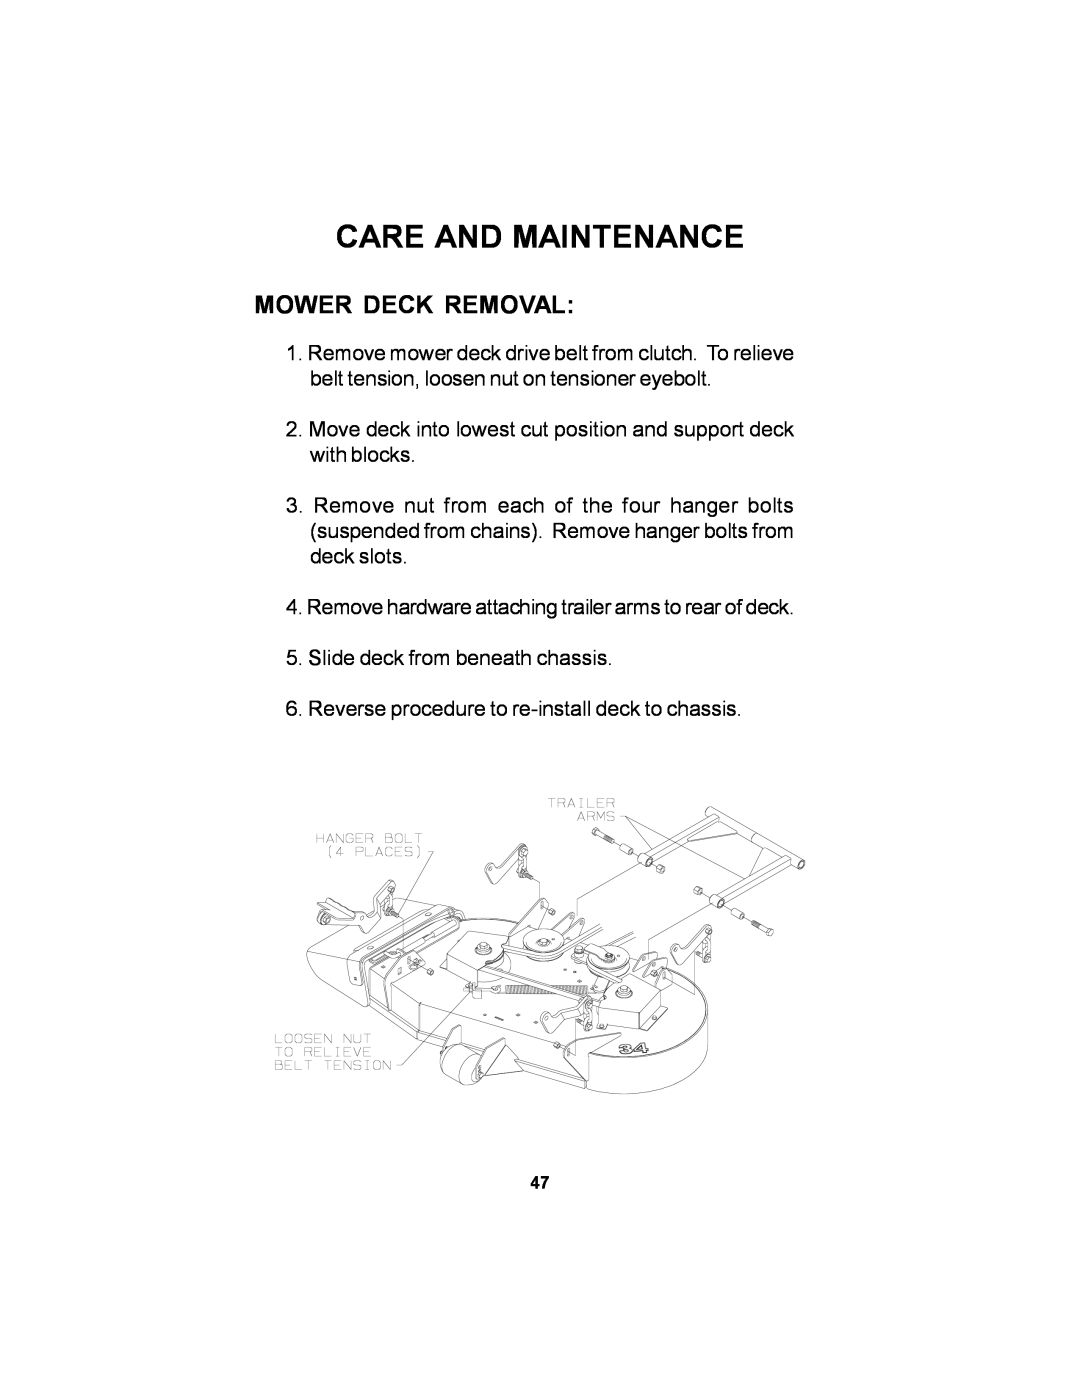 Dixon Black Bear manual Mower Deck Removal, Care And Maintenance 